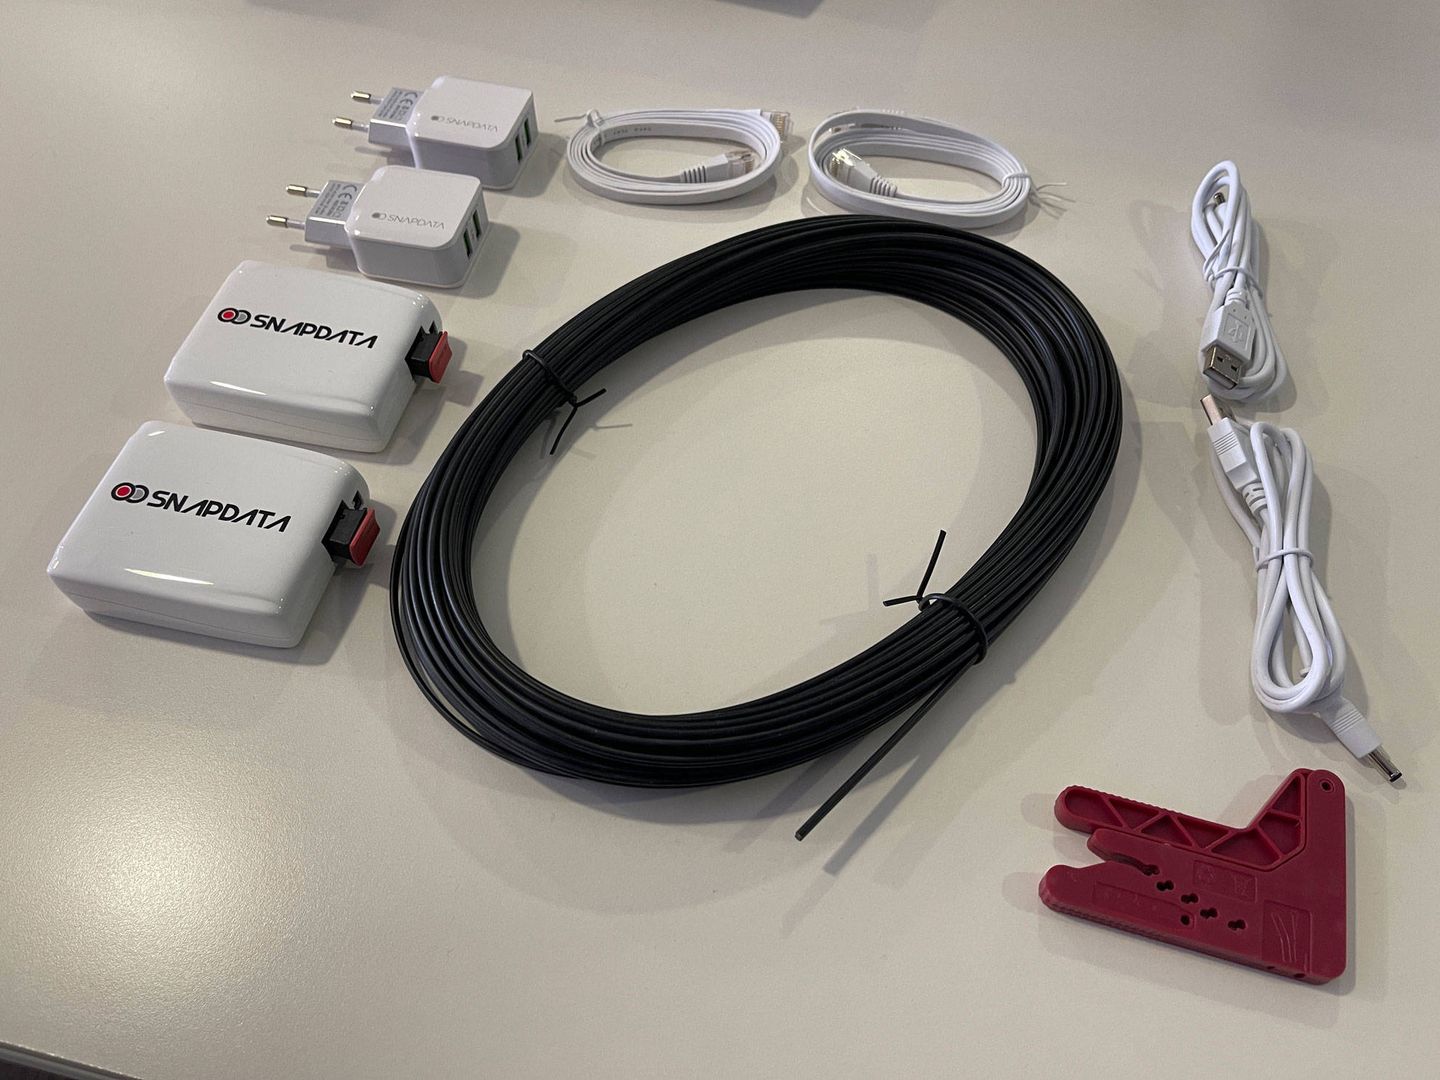 Cable de Fibra Óptica Plástica – Electro Esencial